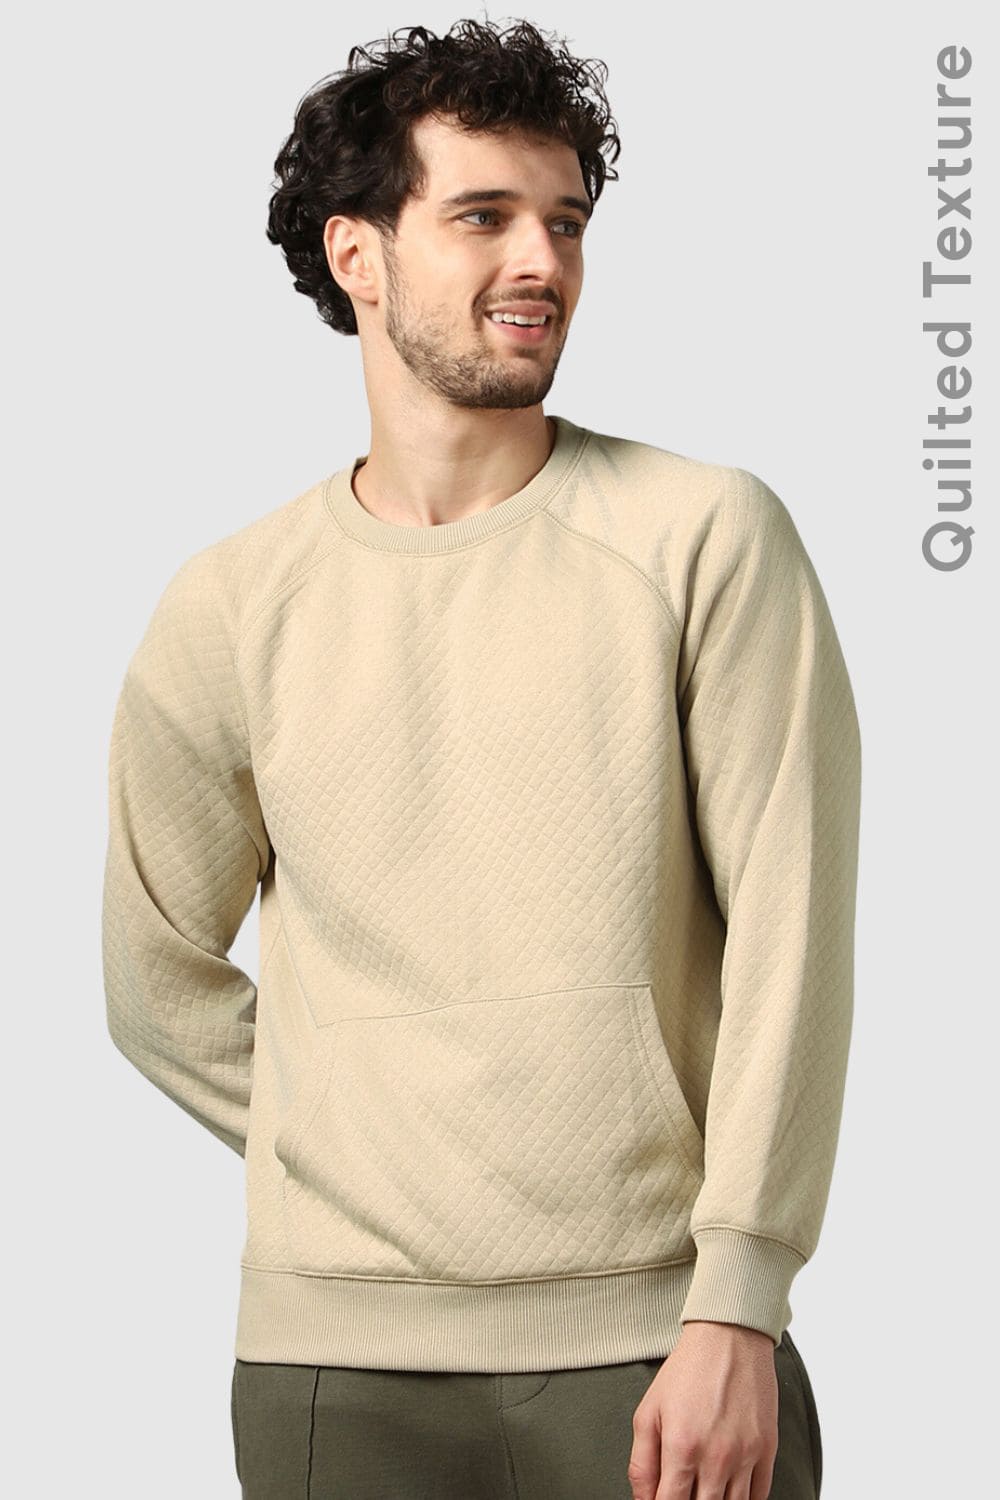 Buy Powder Blue Sweatshirt & Hoodies for Men by Nobero Online